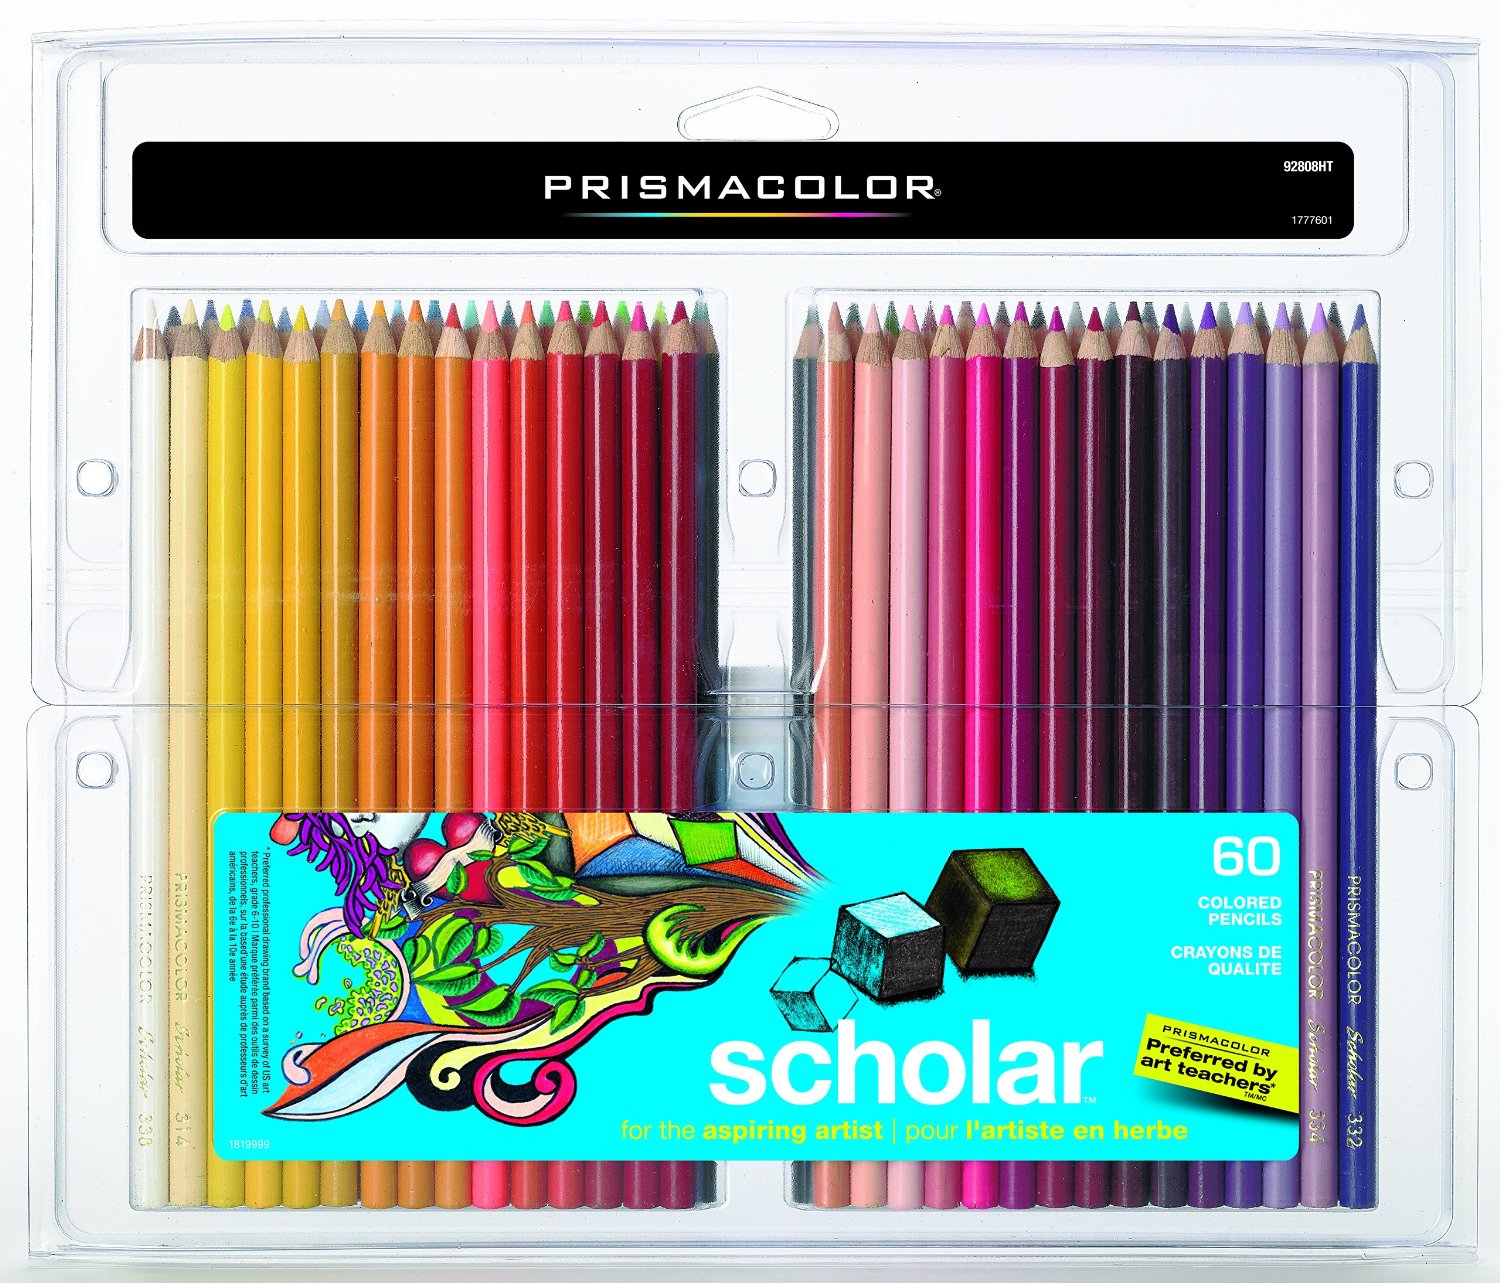 Prismacolor Scholar Colored Pencils, 60-Count – Just $26.99!